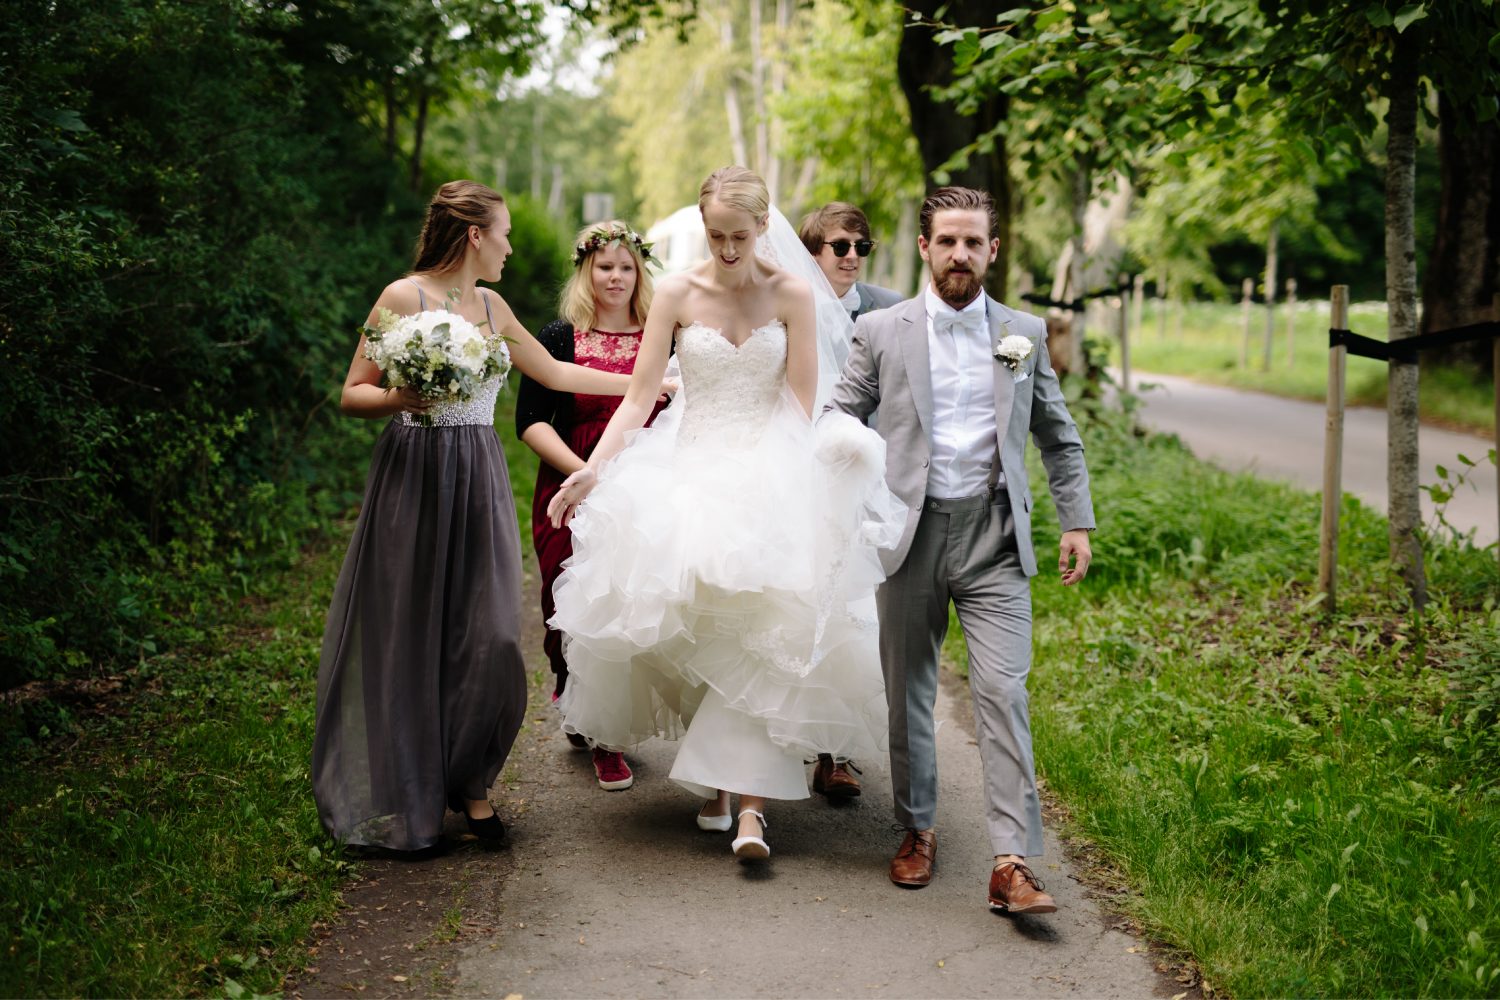 brudefølge på vei til fotograferingen, Bryllup i Moss, Norge